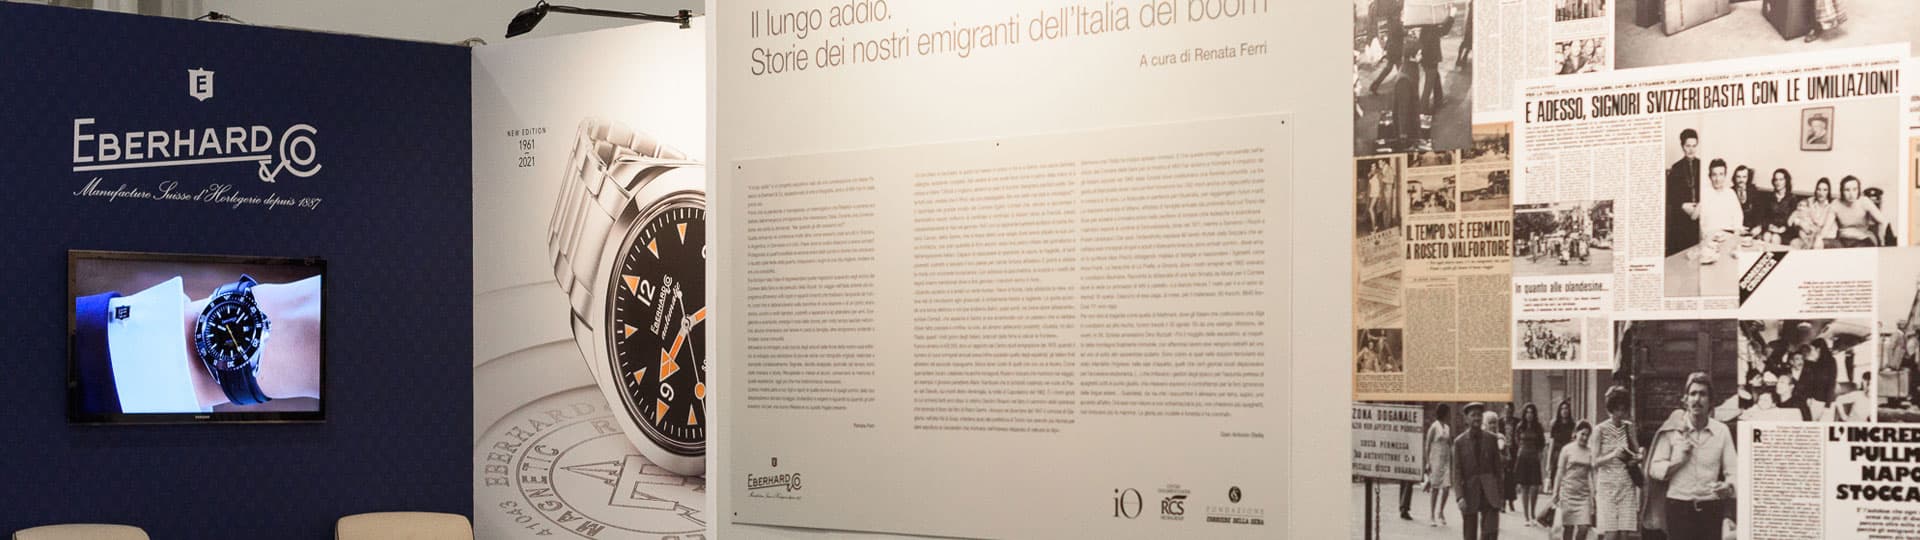 MIA - Milan Image Art Fair